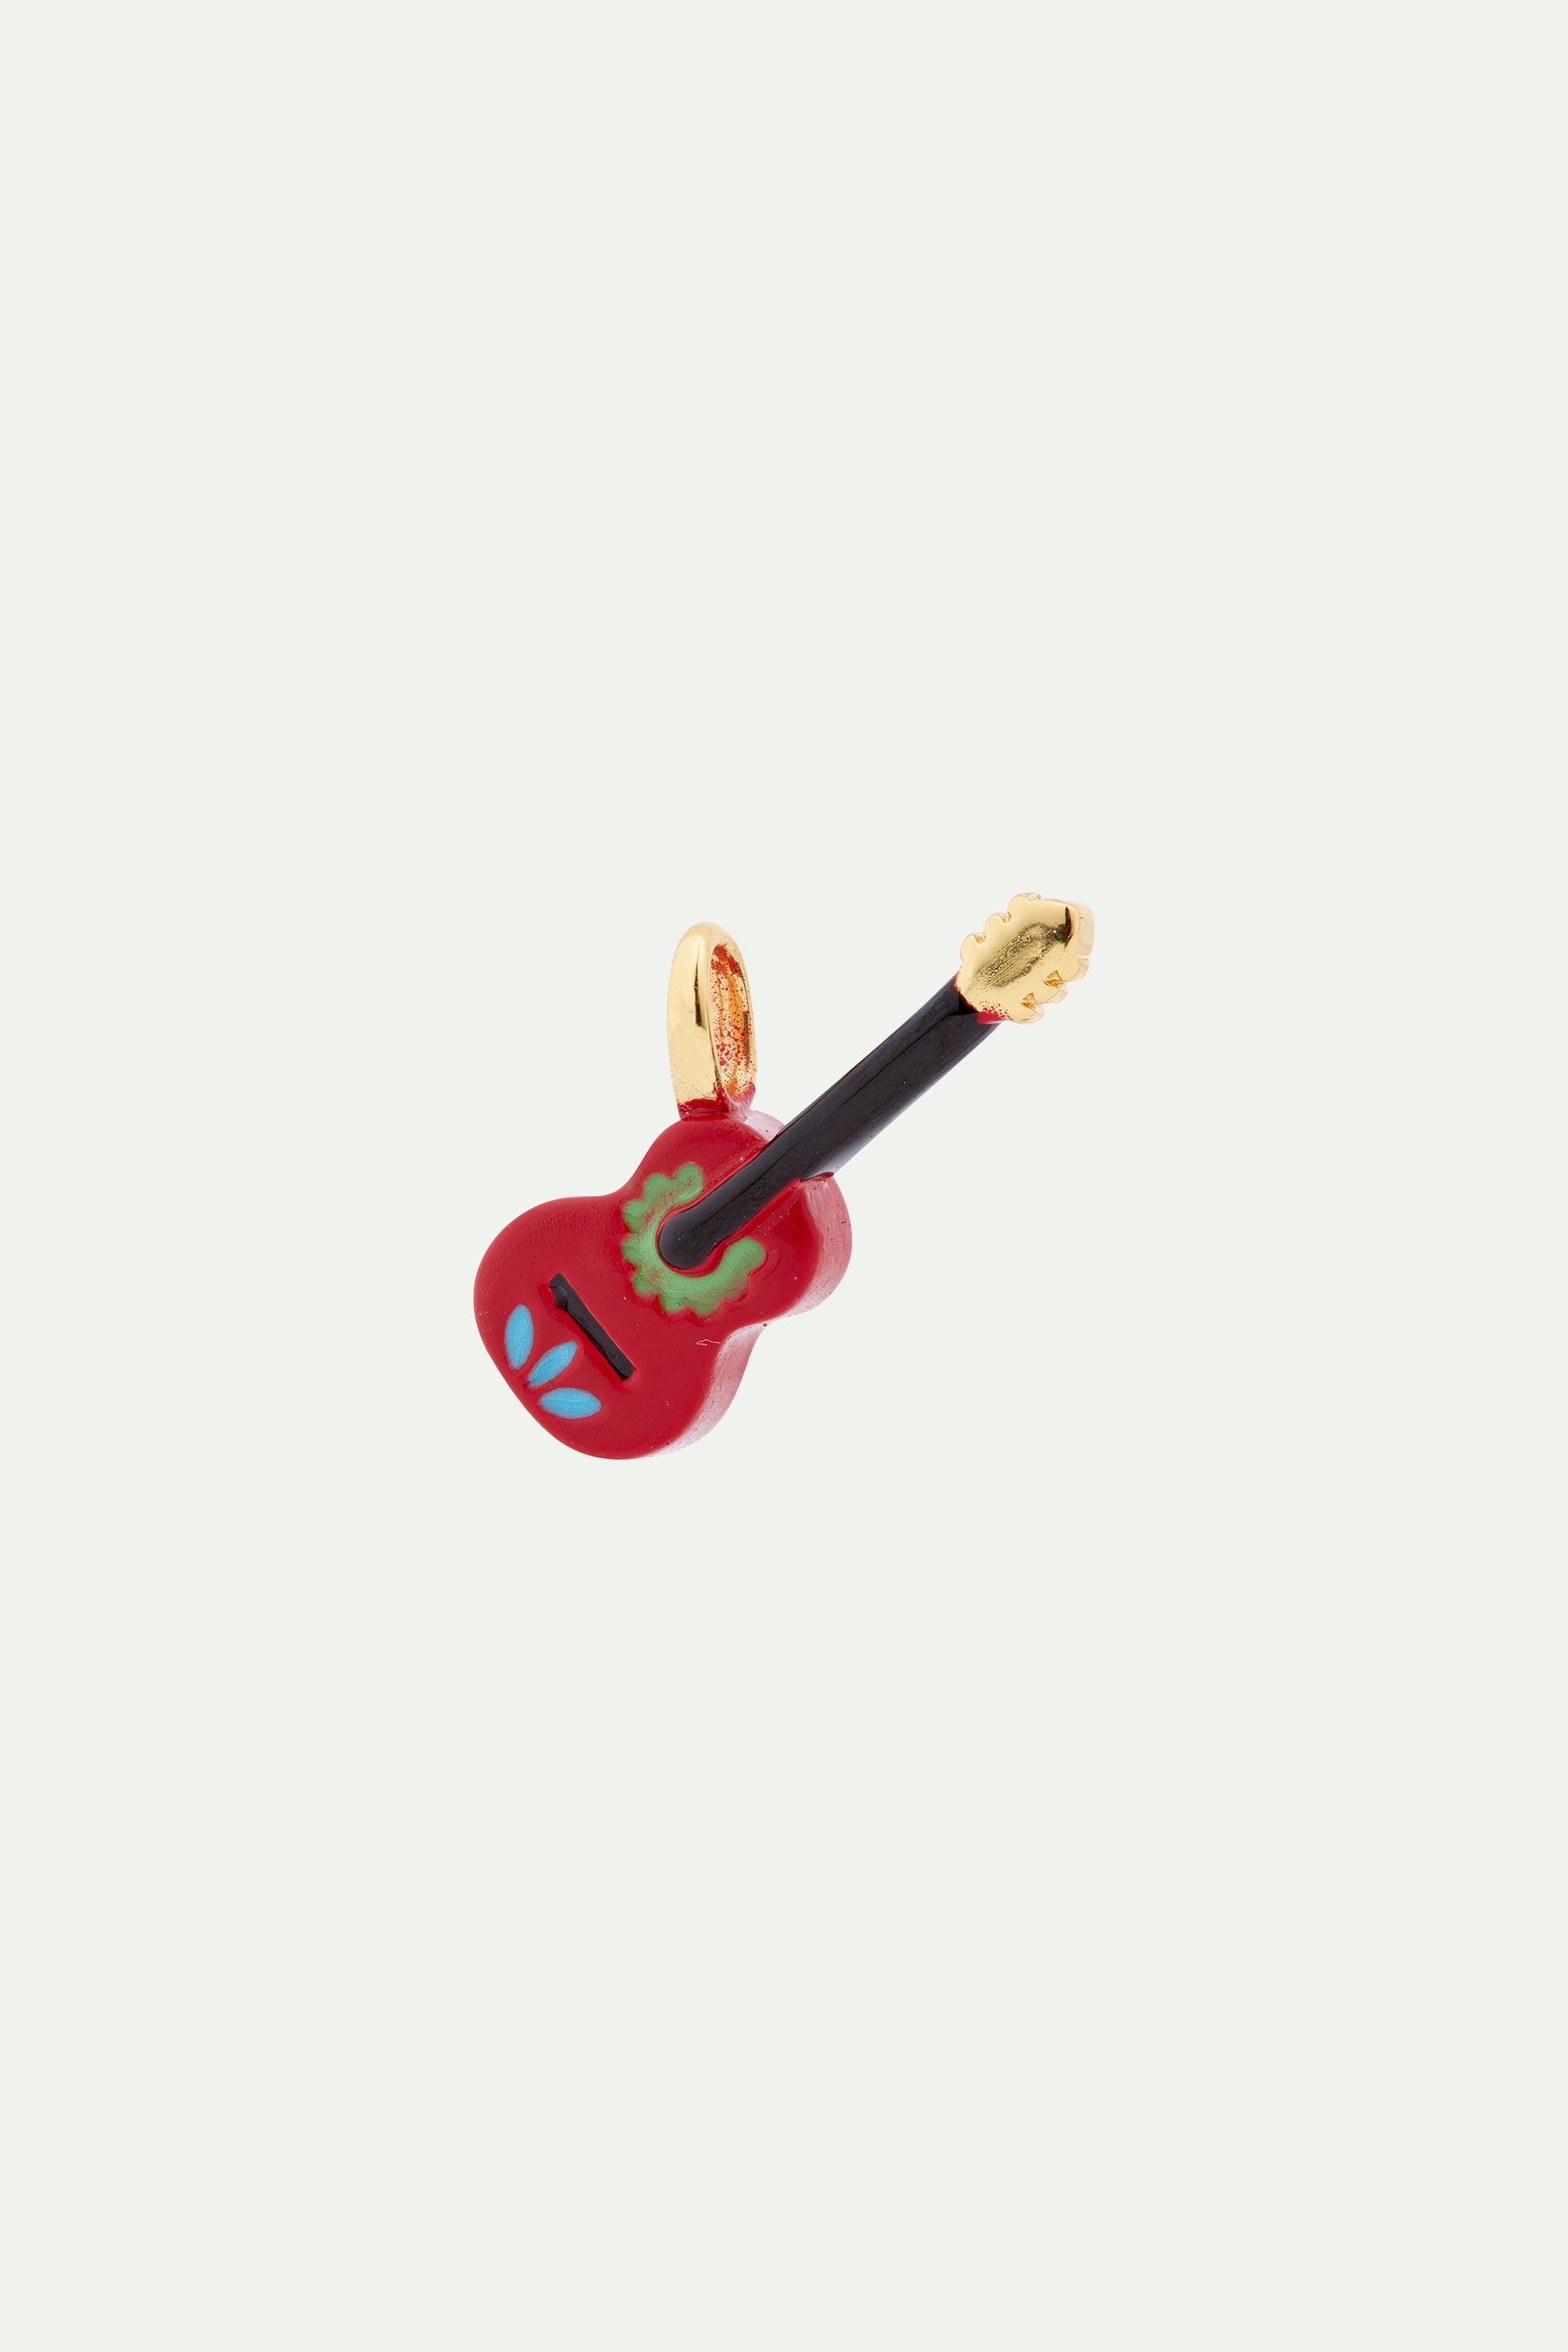 Charm's guitarra mexicana